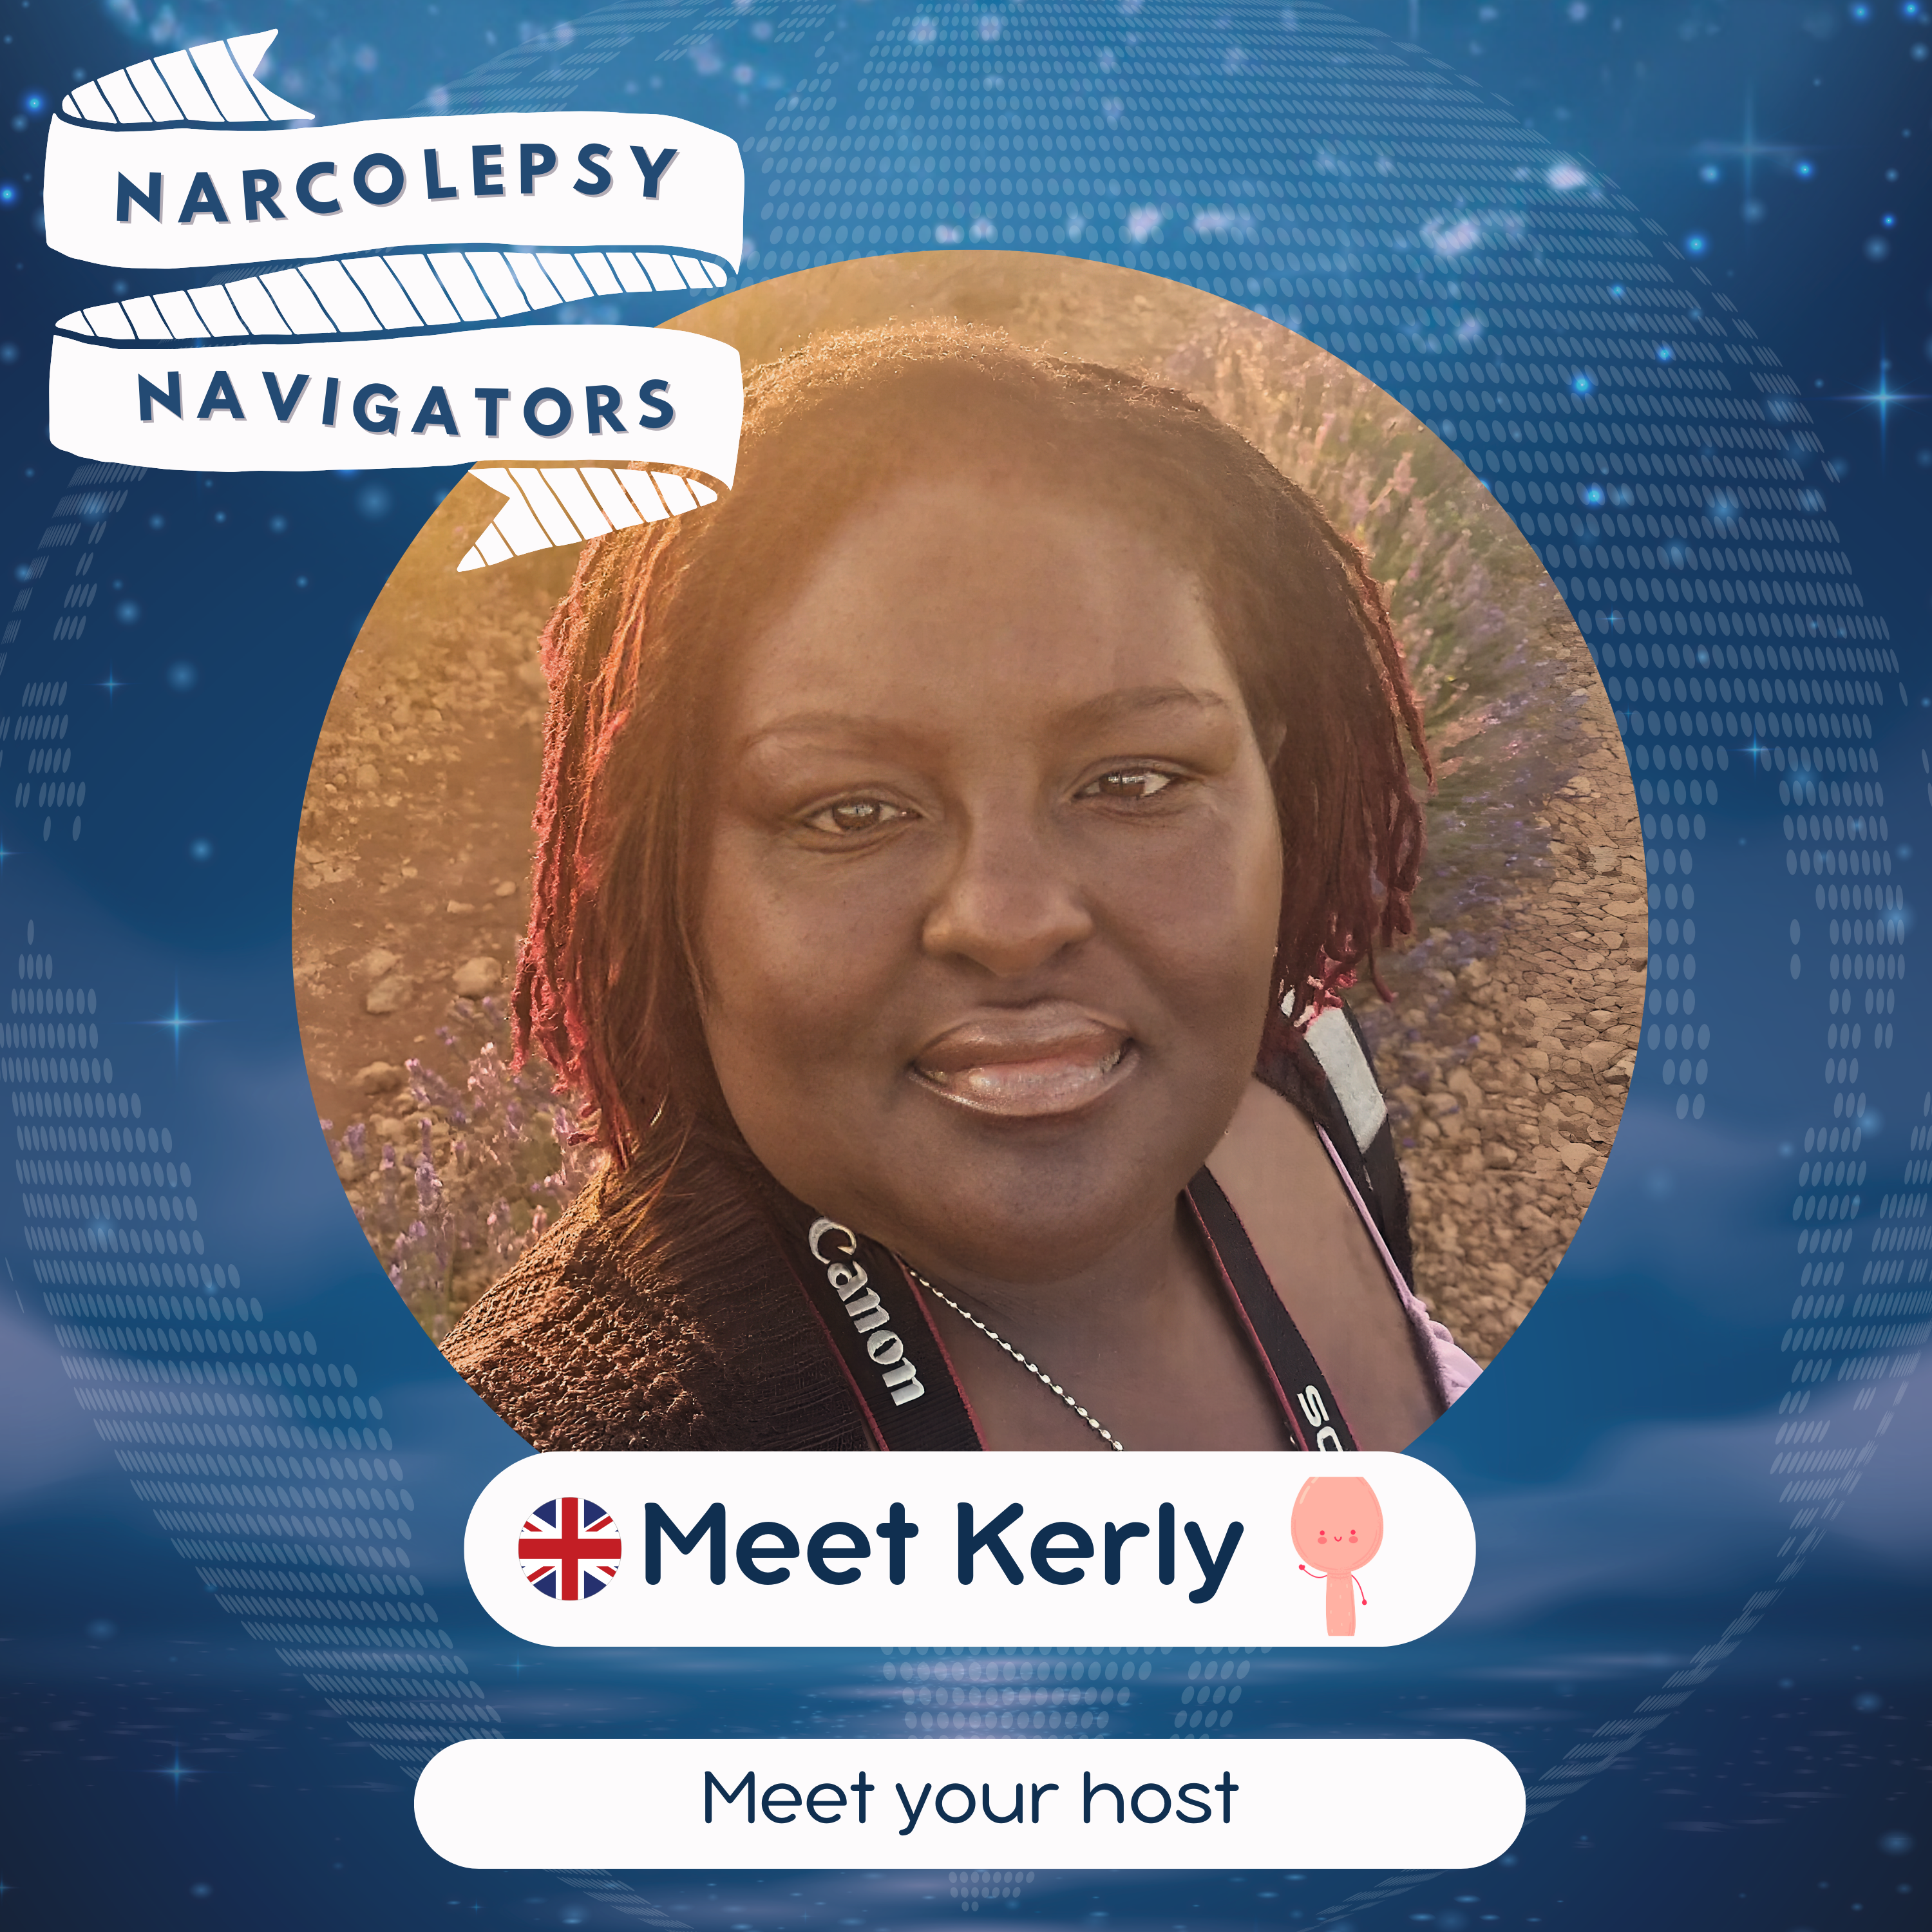 Meet The Host: Kerly's Narcolepsy Journey